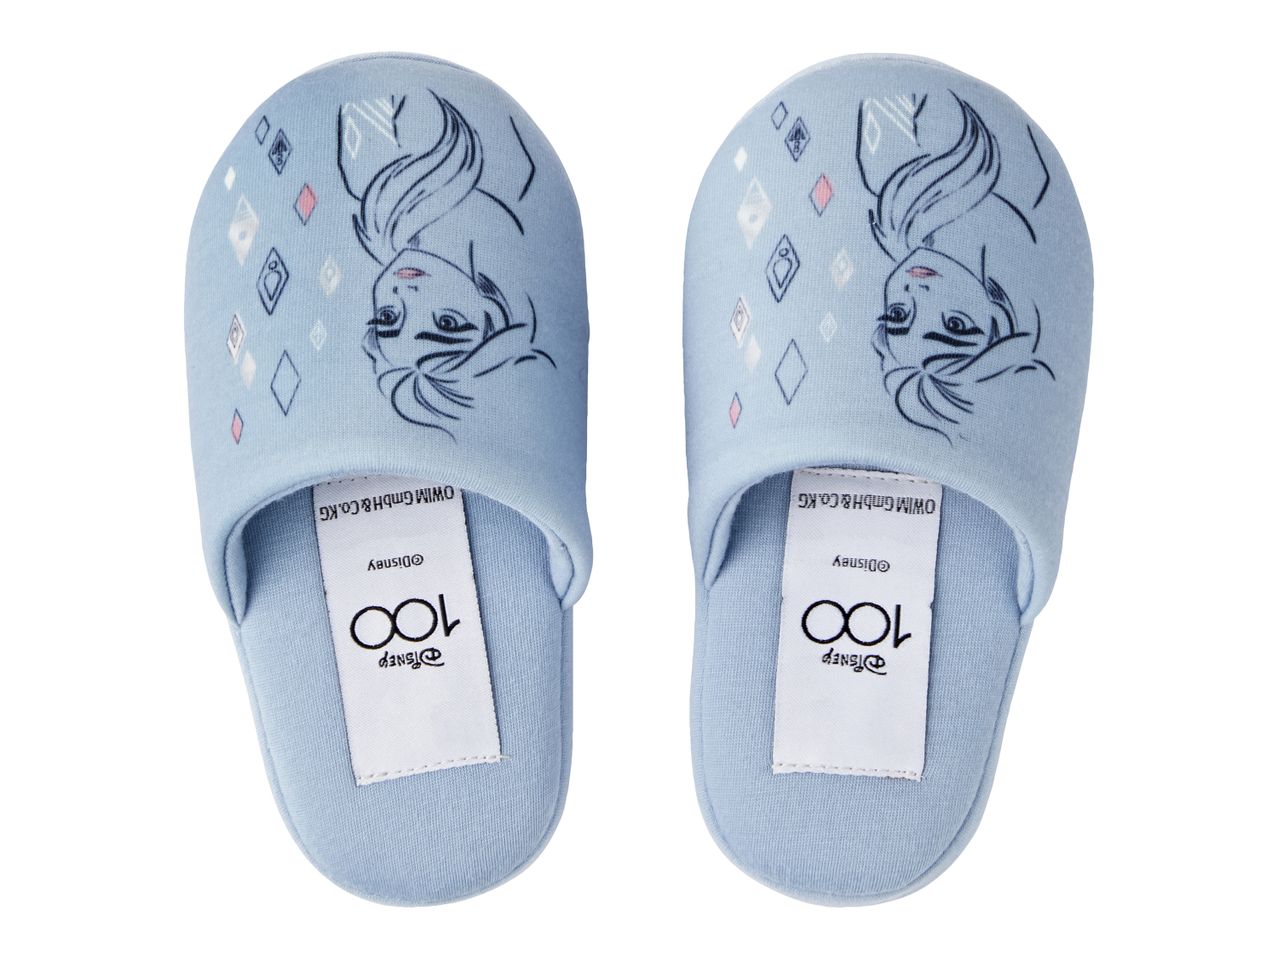 Pantofole da bambina Minne Mouse, Frozen , prezzo 4.99 EUR